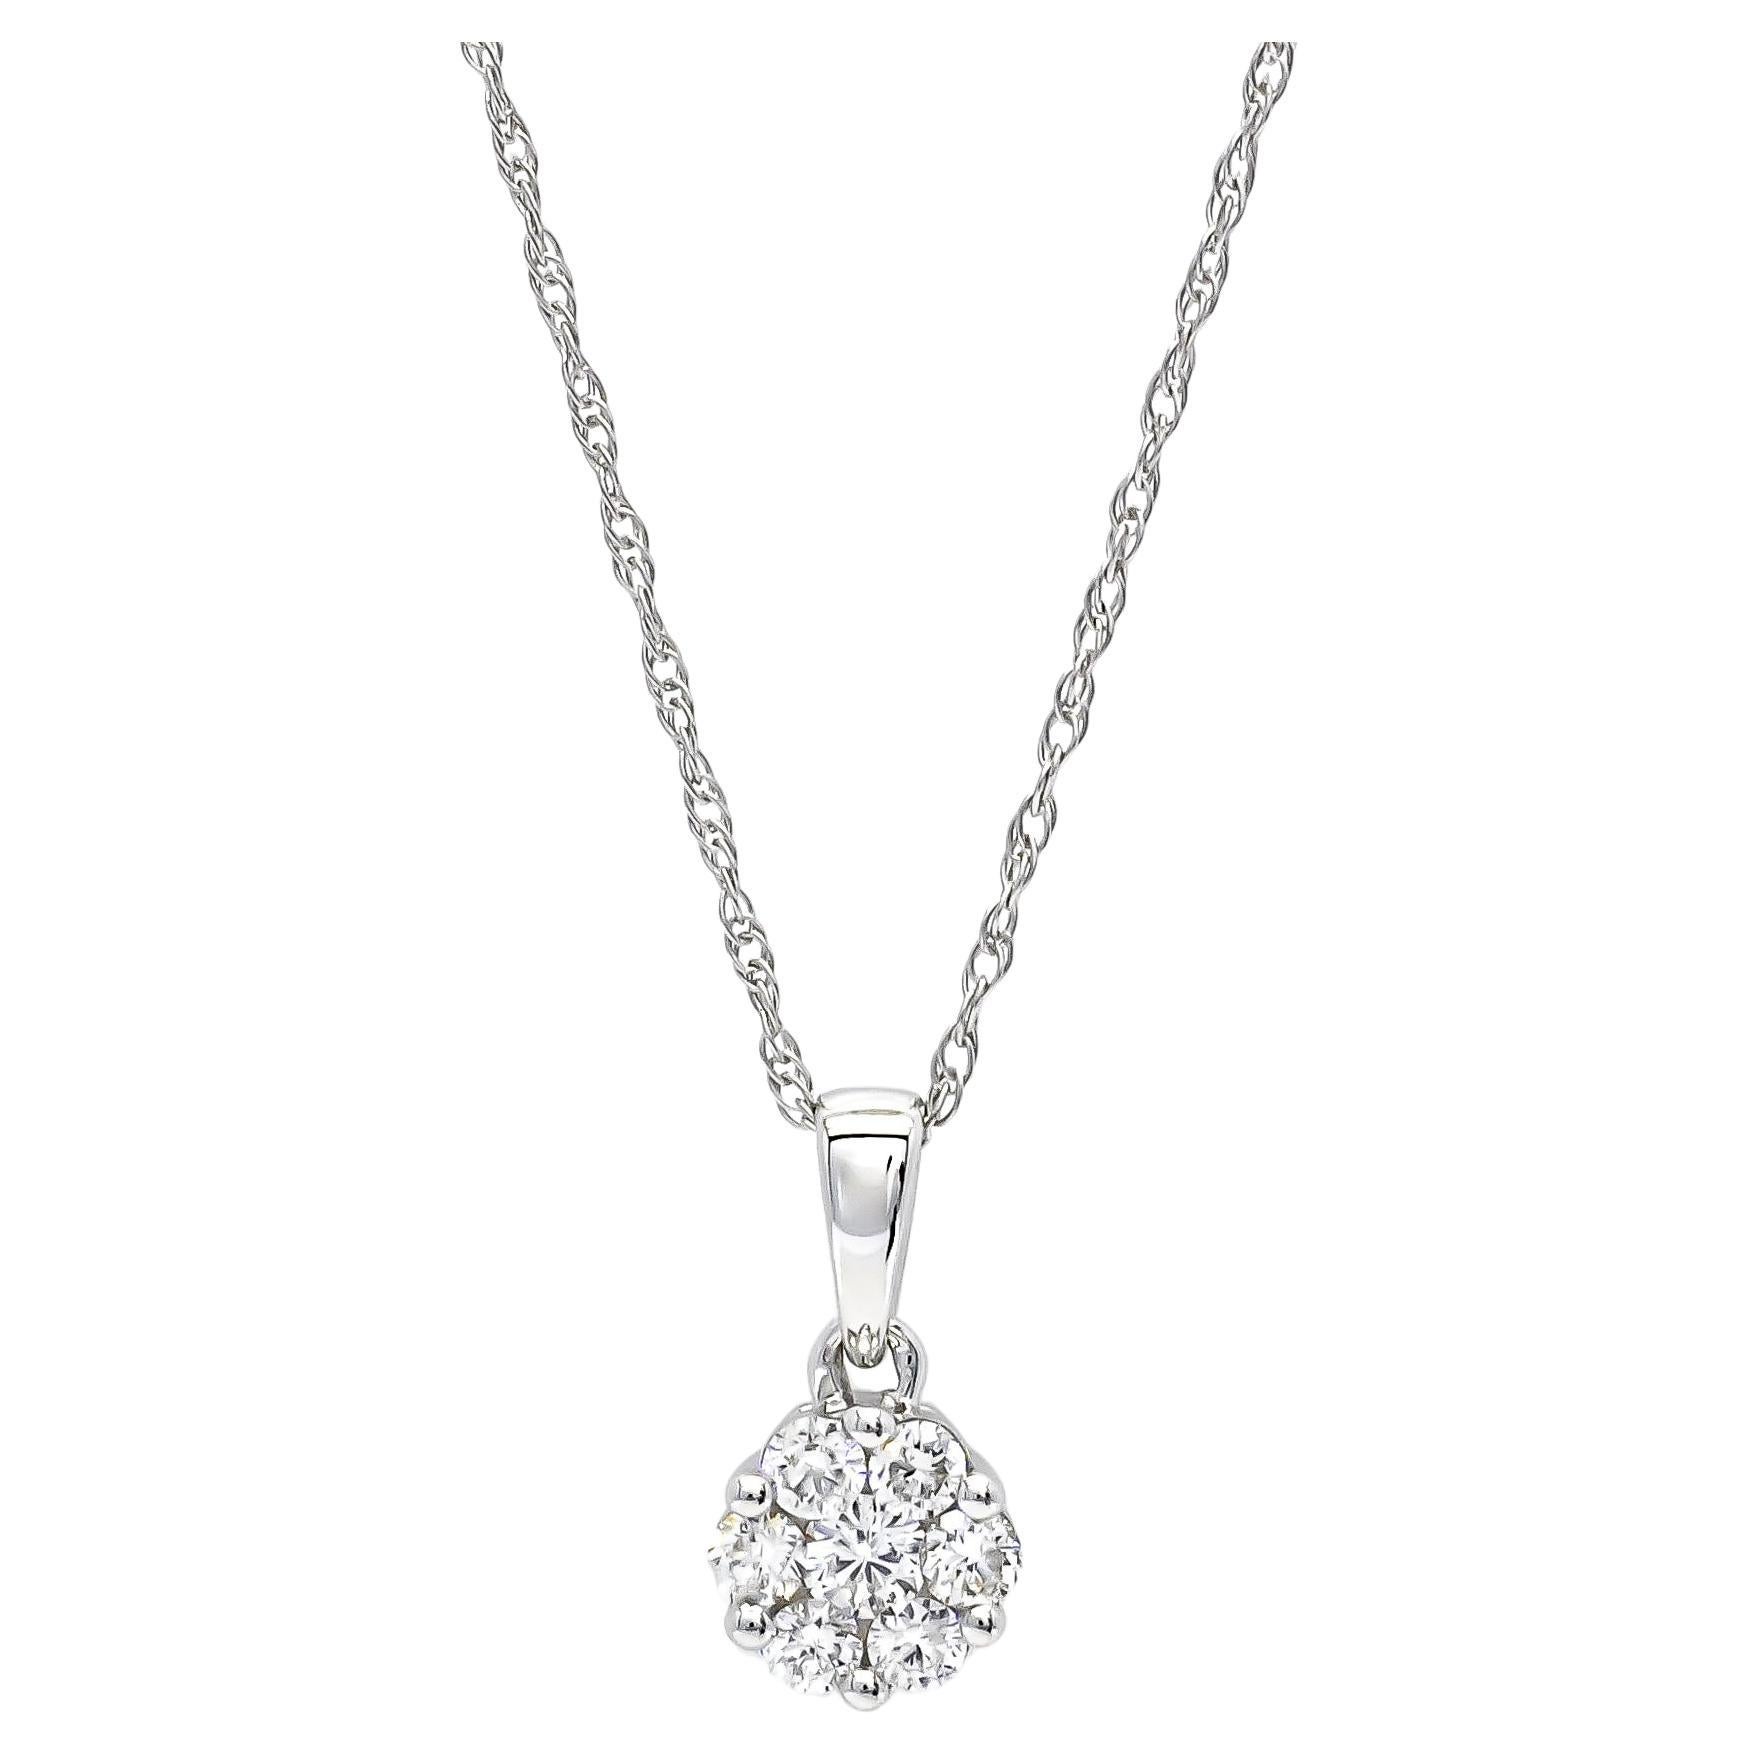  Natural Diamonds 1.00 carats 18 Karat White Gold Classic Pendant Necklace For Sale